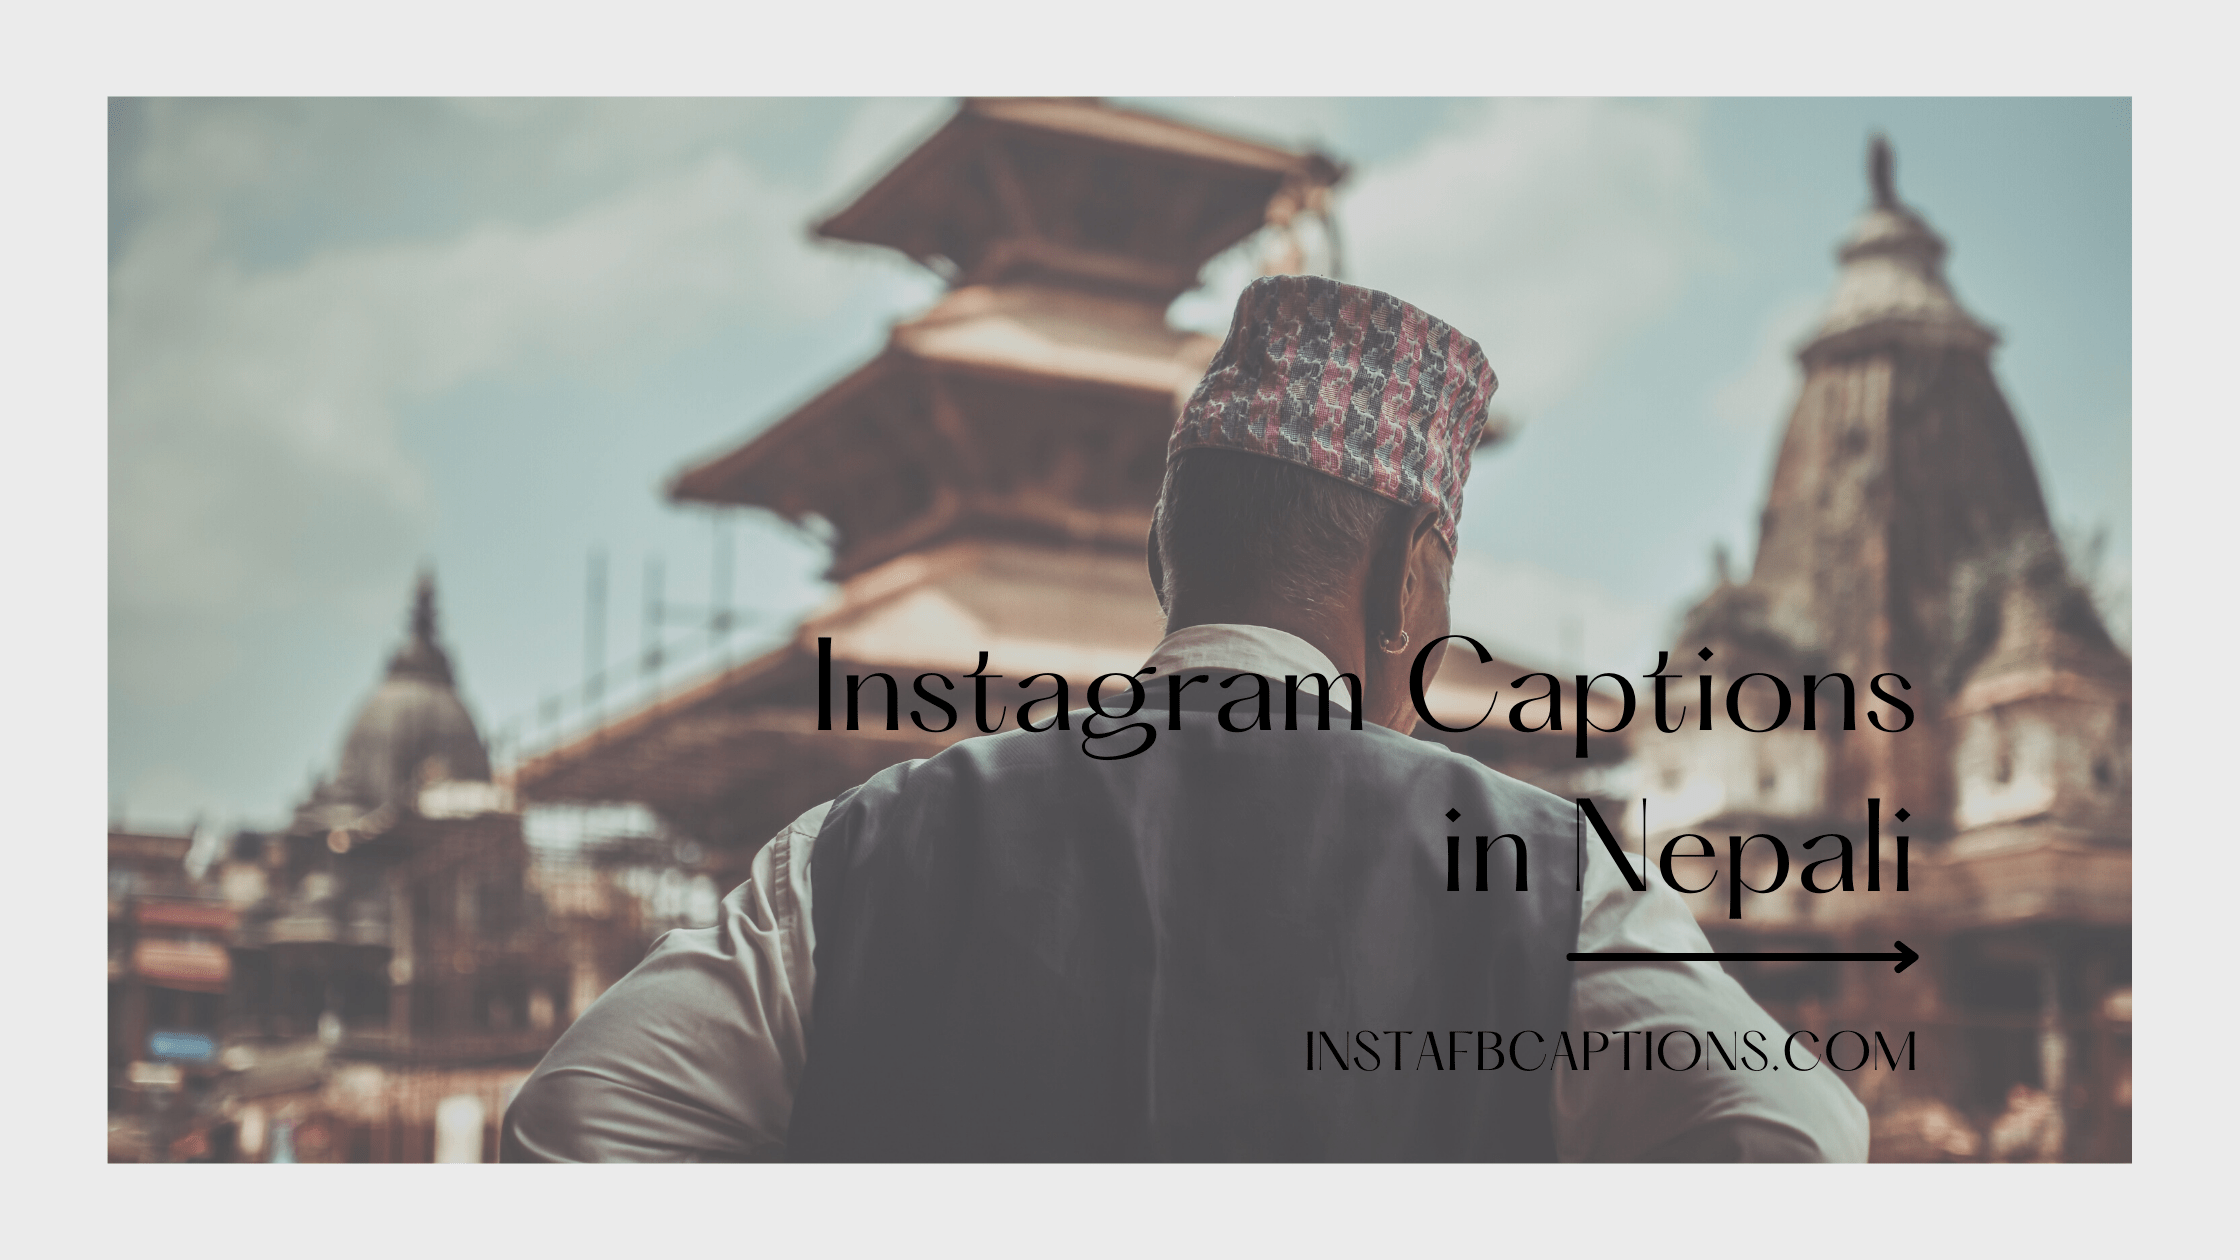 Instagram Captions In Nepali  - Instagram Captions in Nepali - 99+ Instagram Captions in NEPALI in 2022